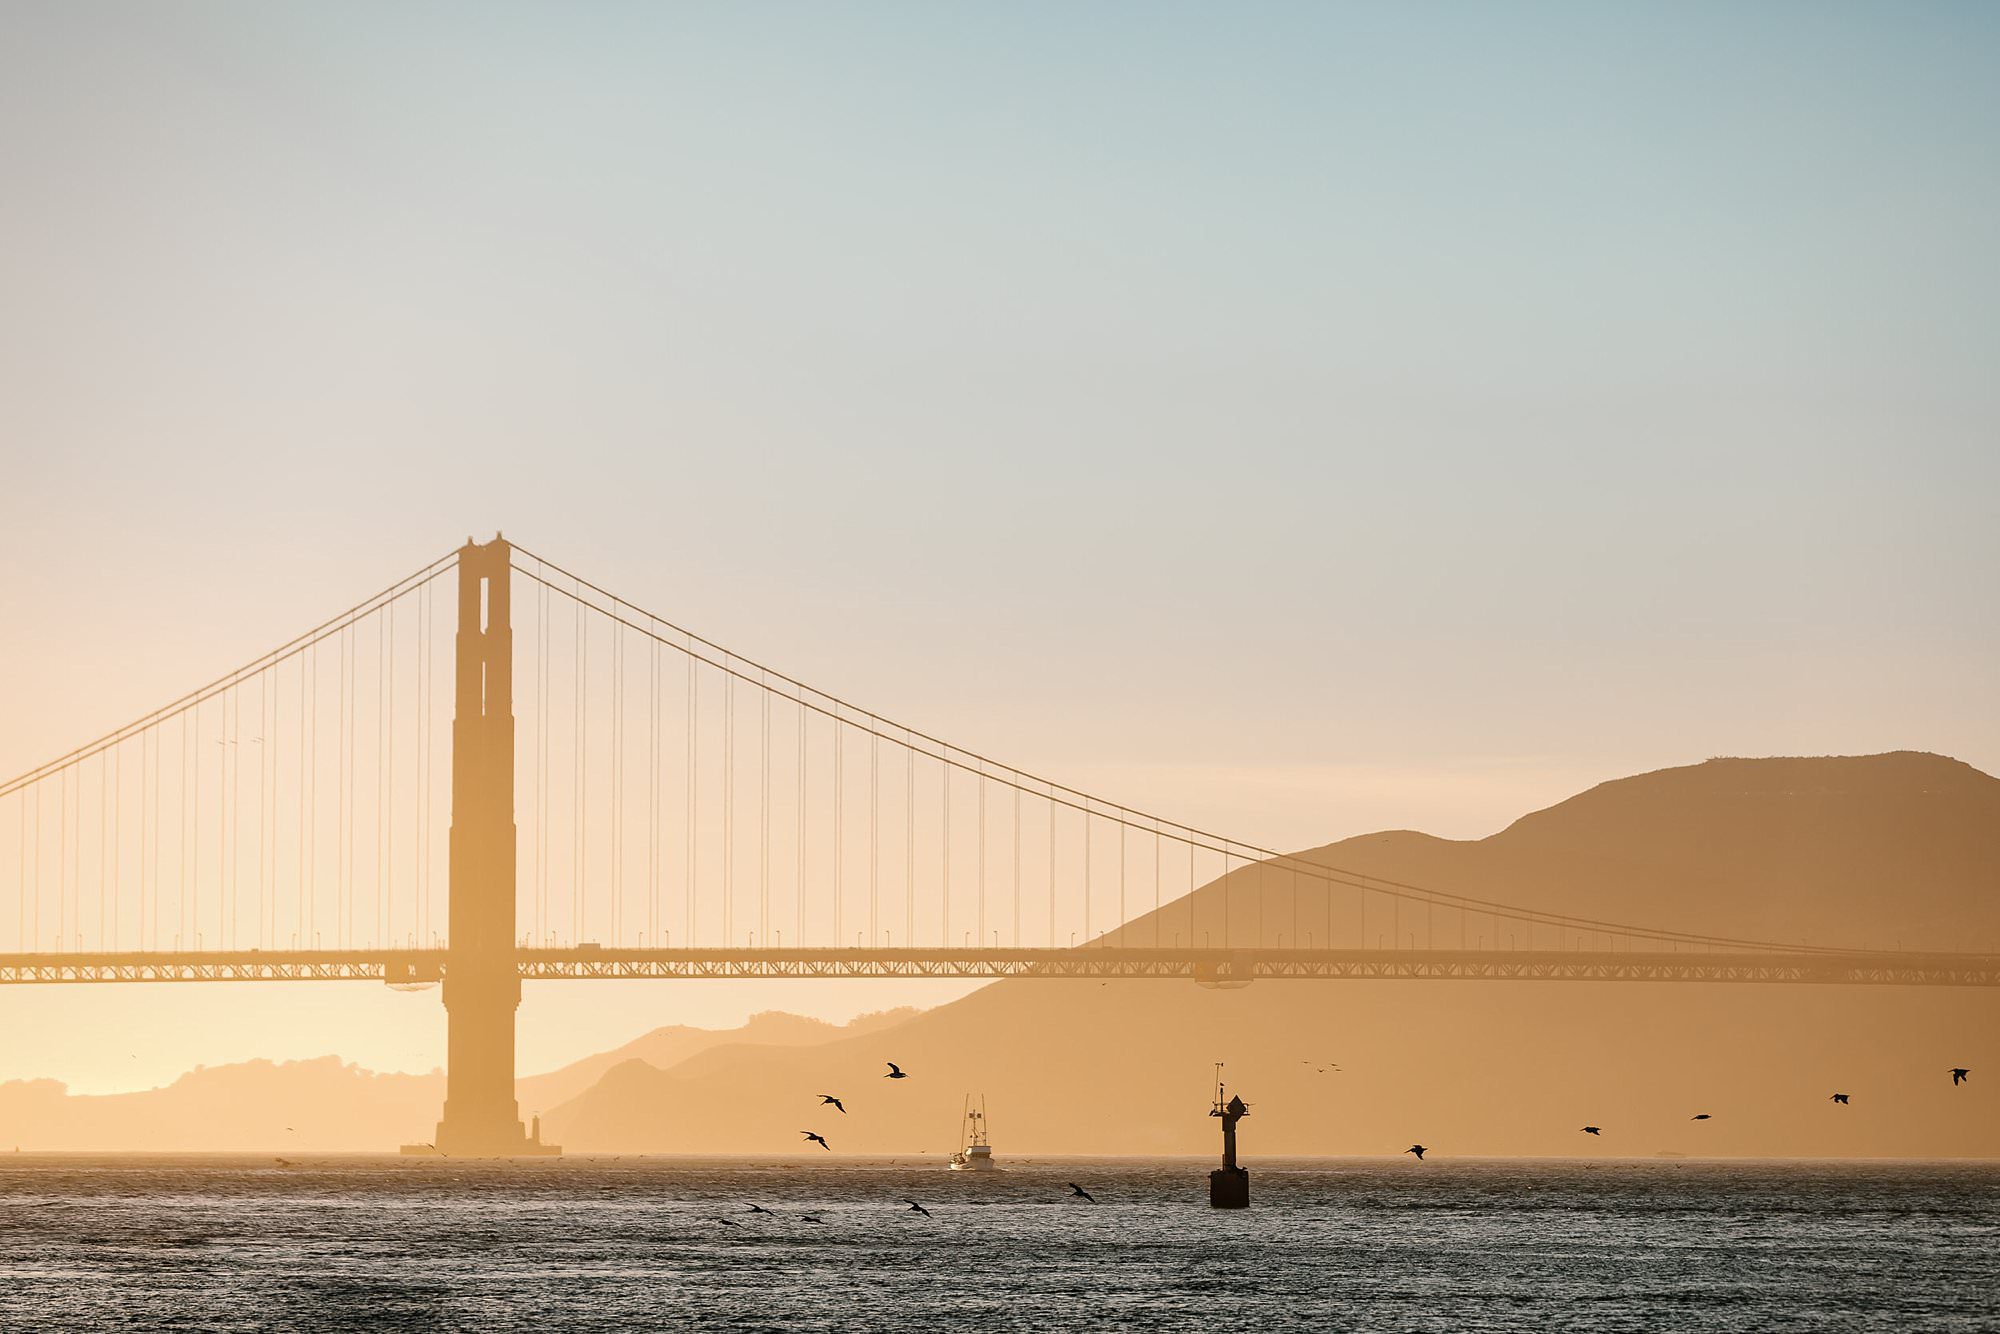 Flock of bird under the Golden Gate Bridge at sunset